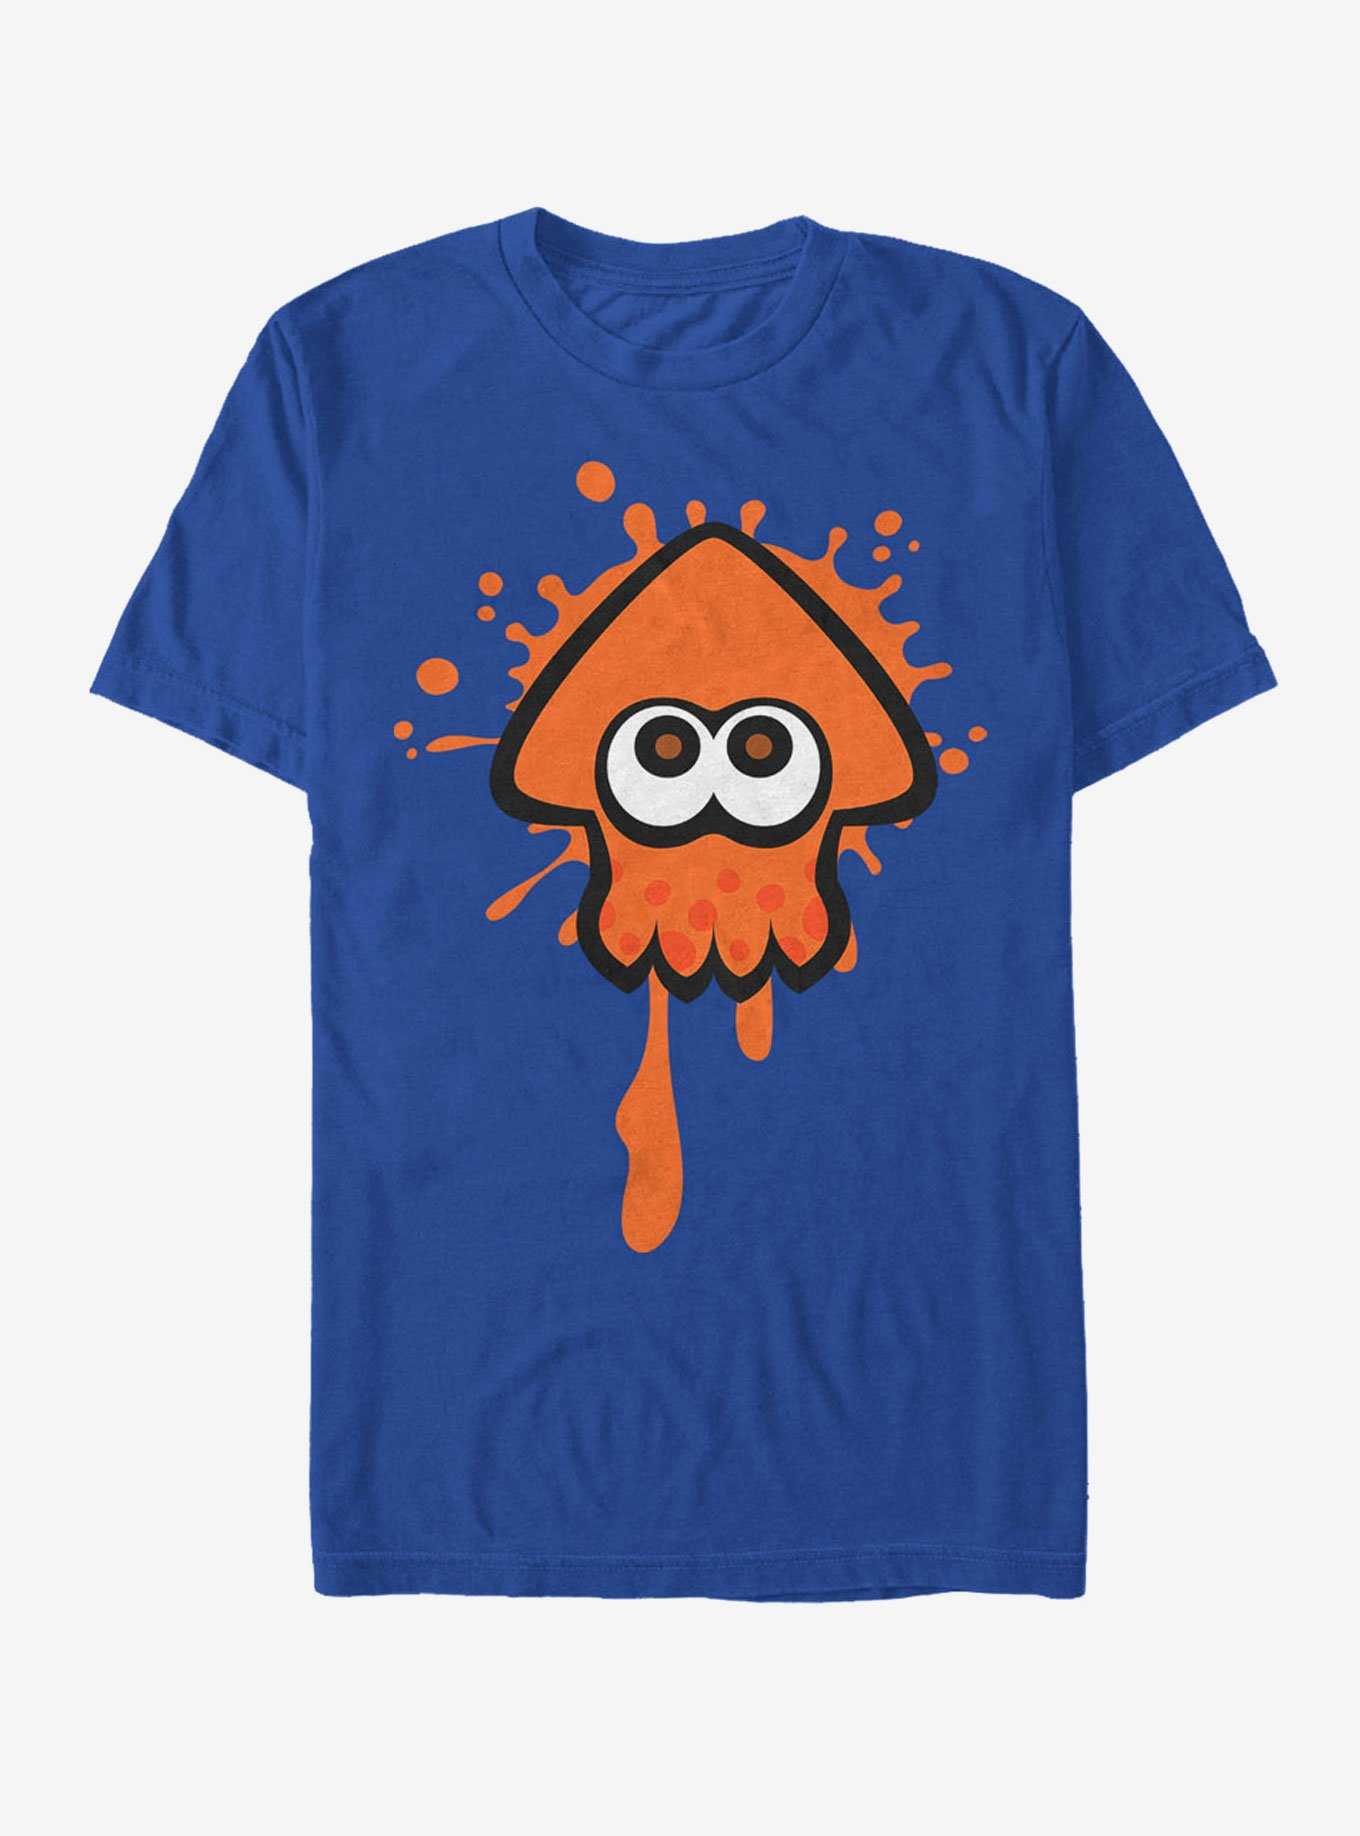 Nintendo Splatoon Orange Inkling Squid T-Shirt - GREY